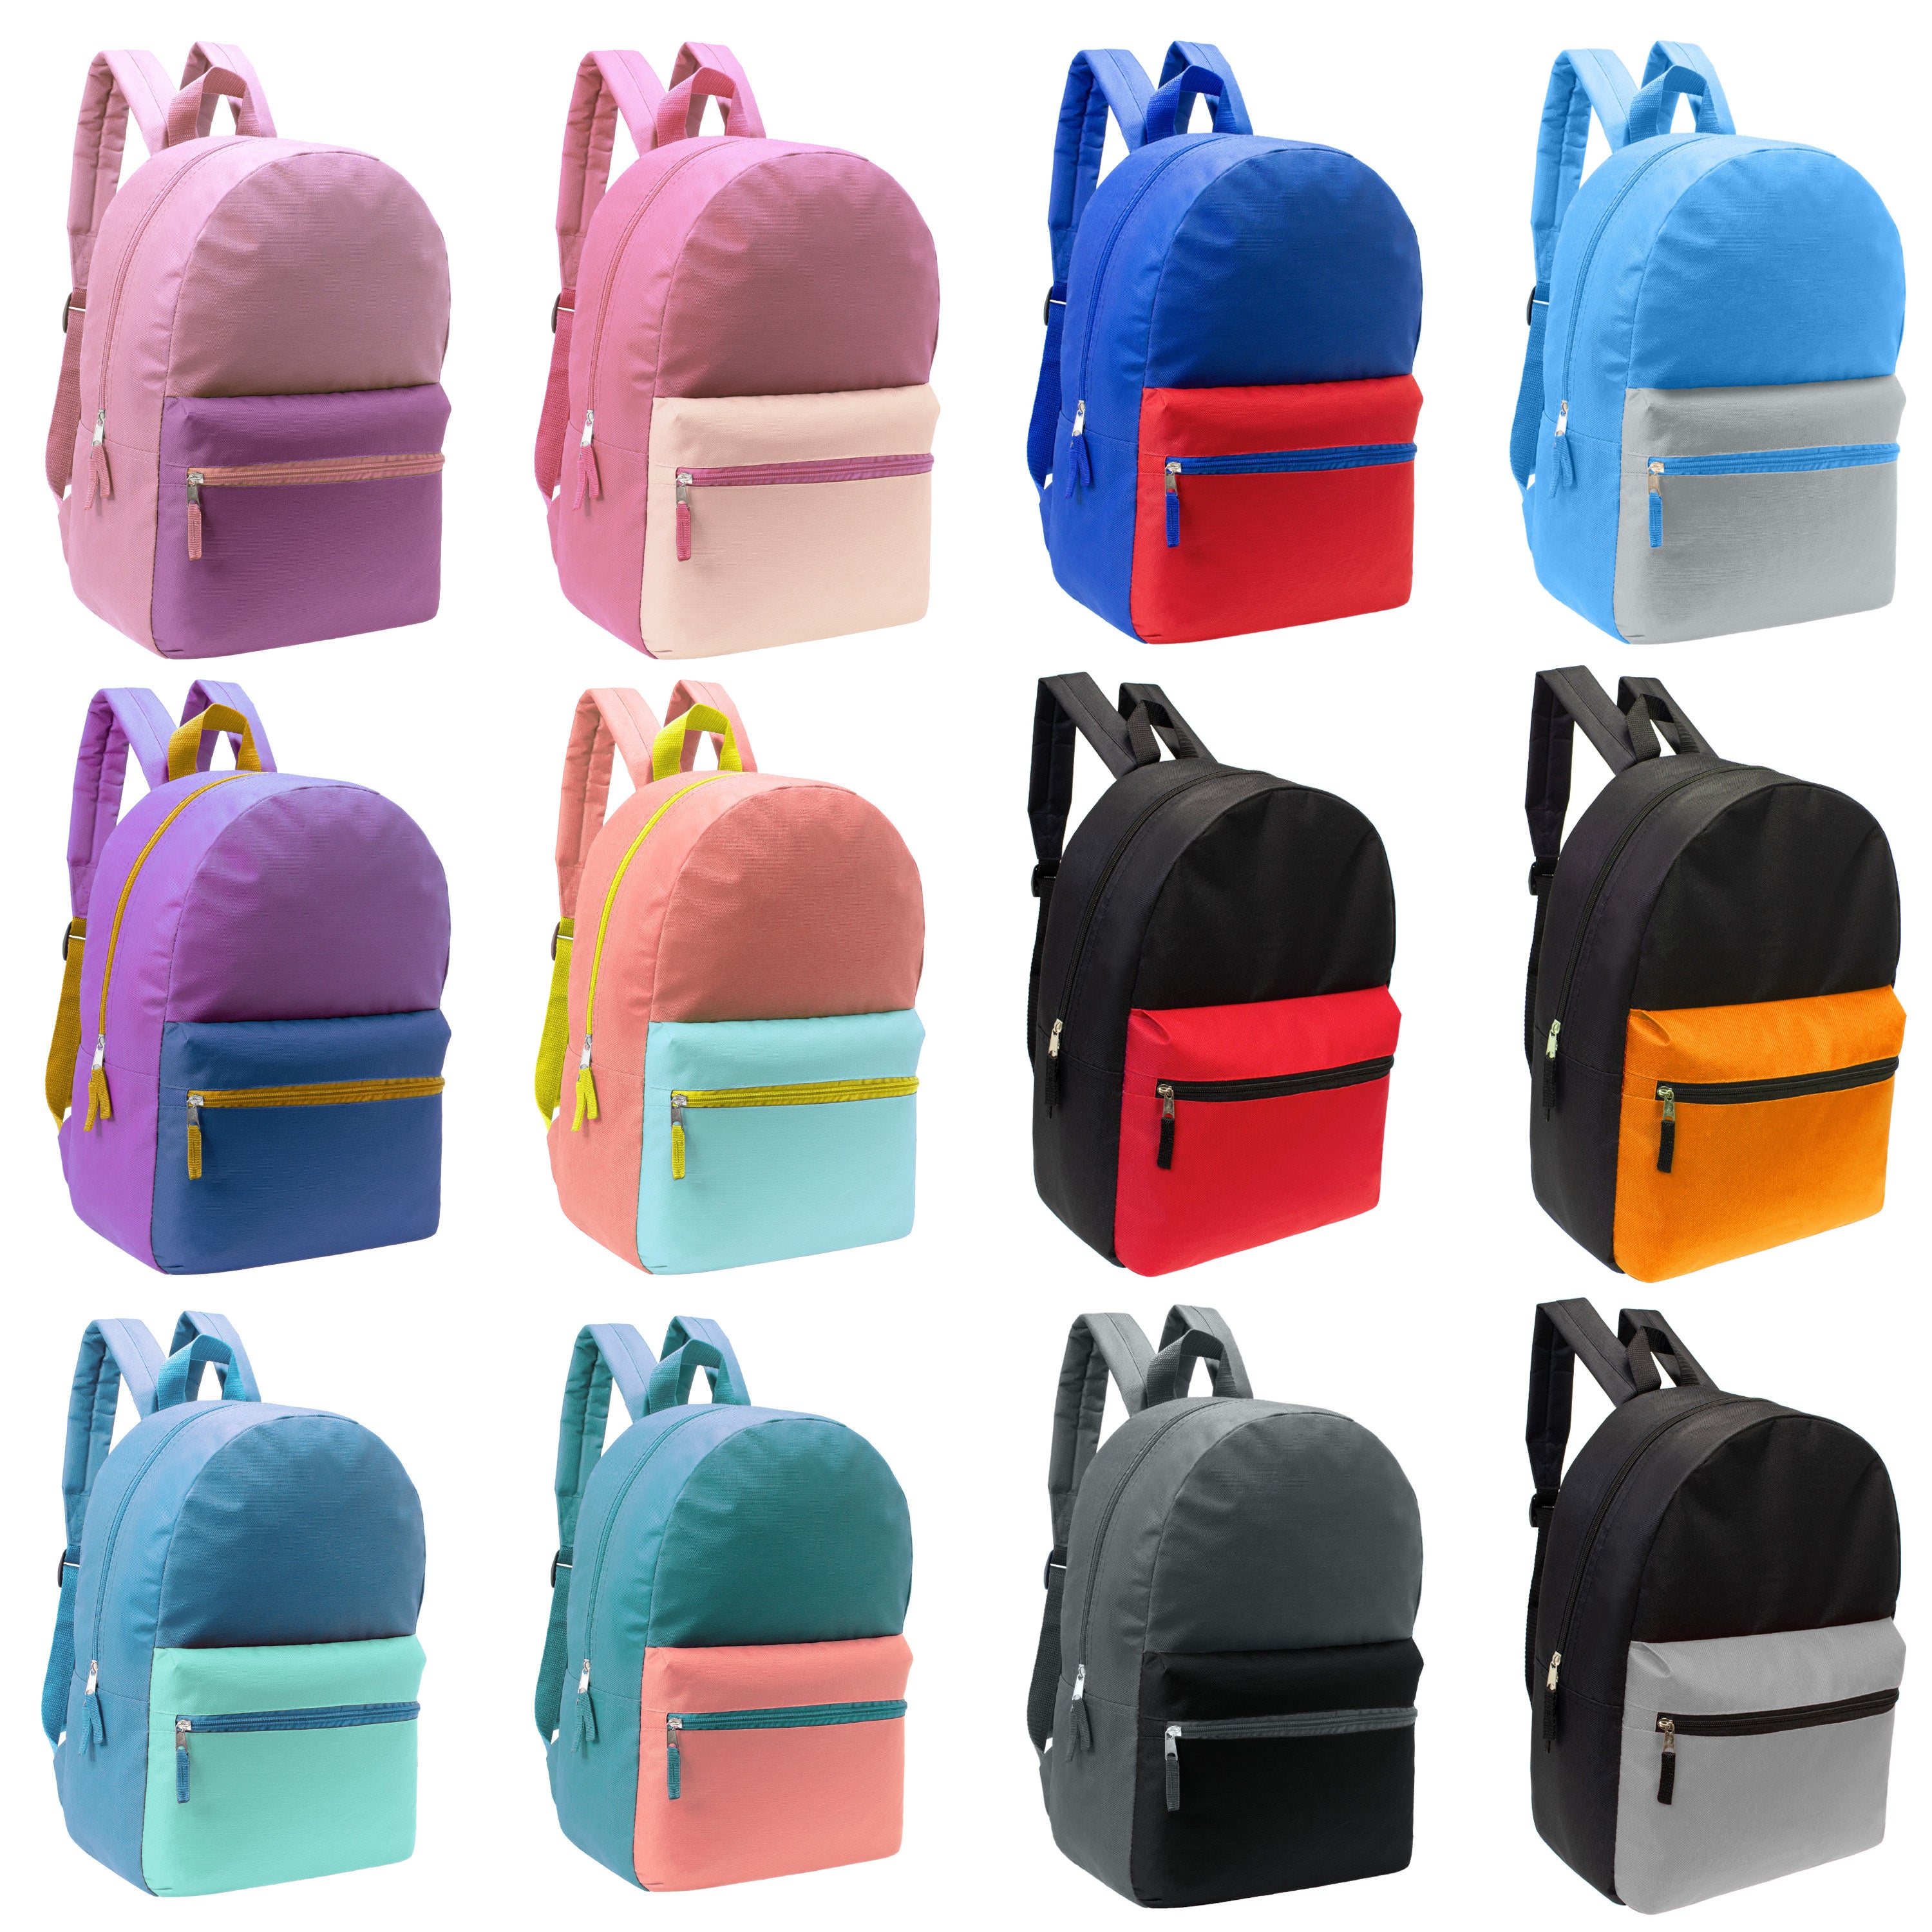 17" Kids Basic Wholesale Backpack in 12 Colors 2 Tone - Bulk Case of 24 Backpacks